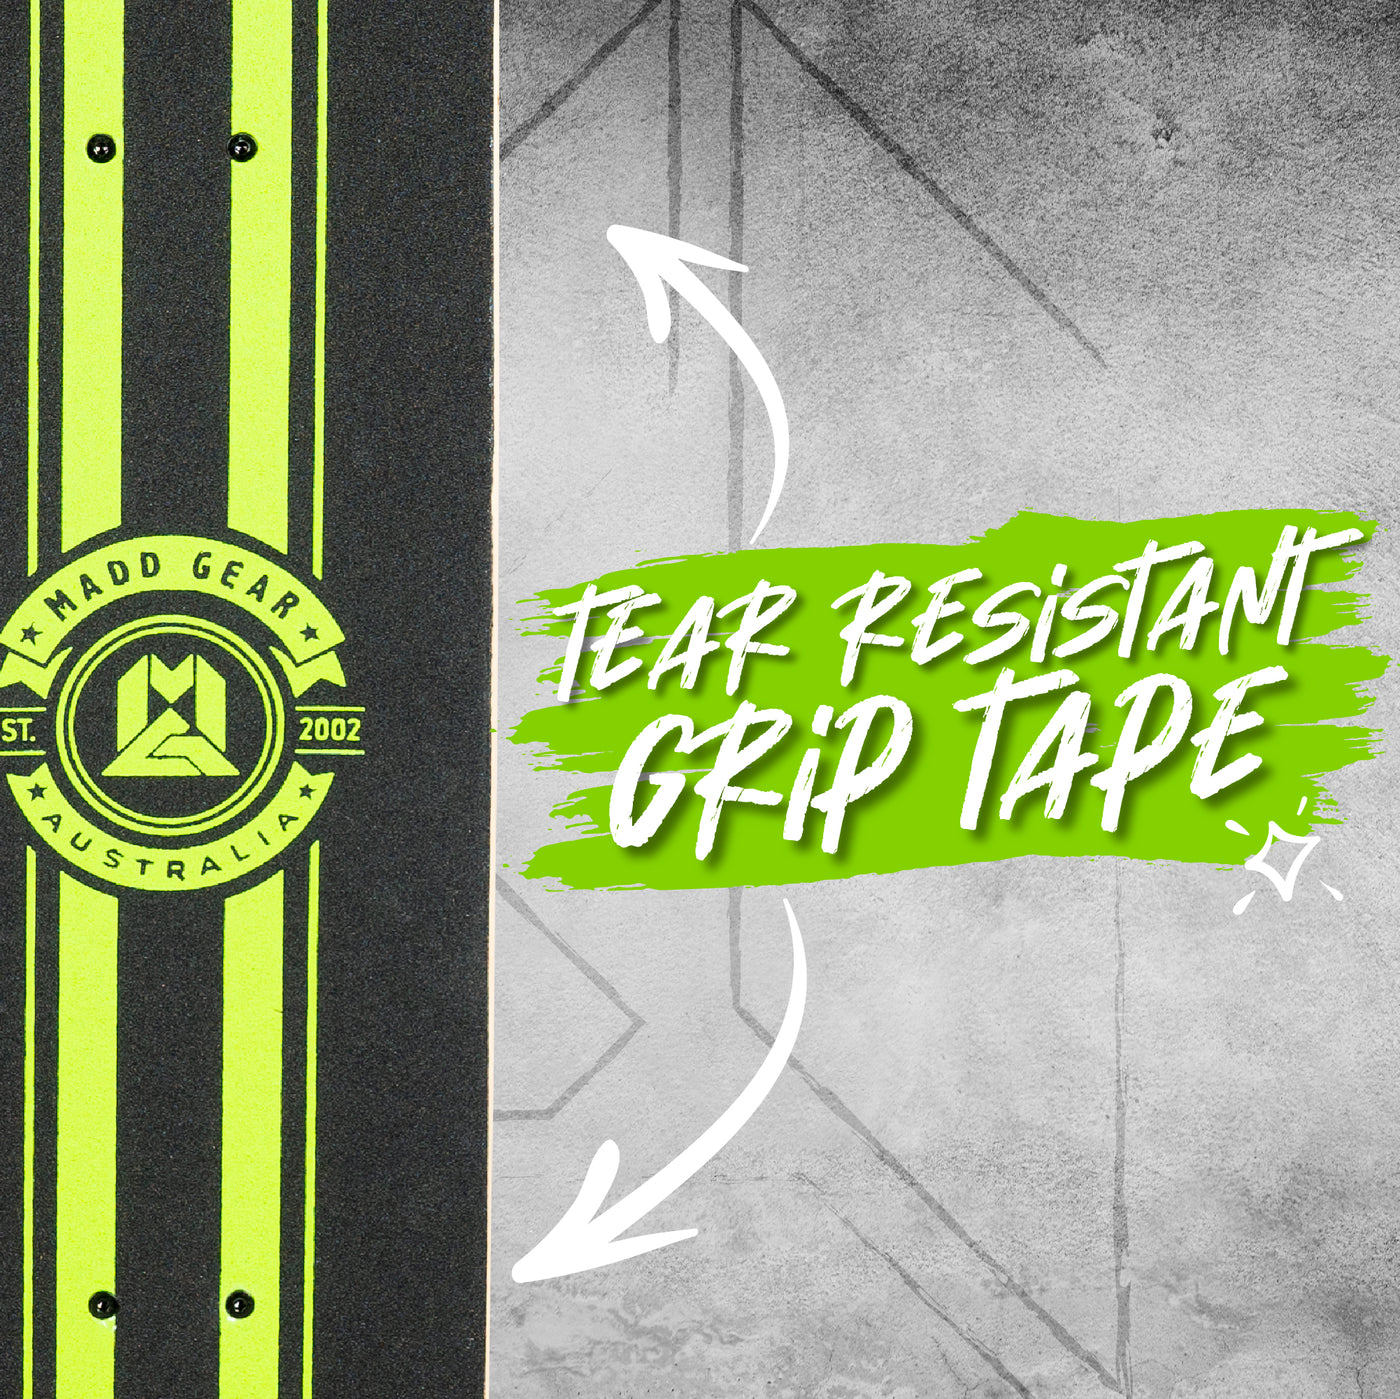 Madd Gear madgear complete skateboard kids trick board grip tape deck maple ply canadian quality